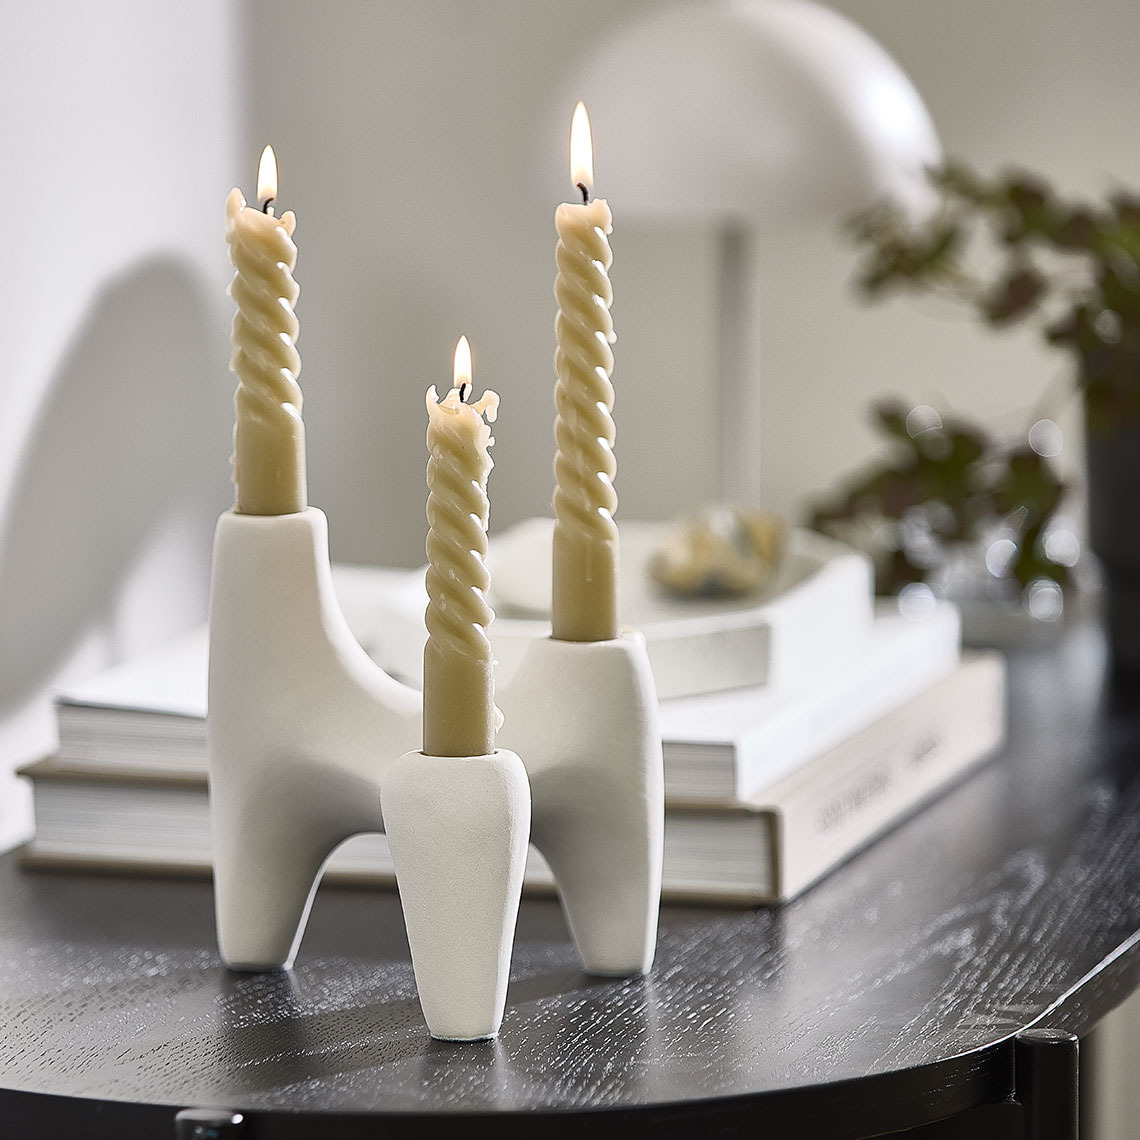 Portacandela bianco con candele a spirale